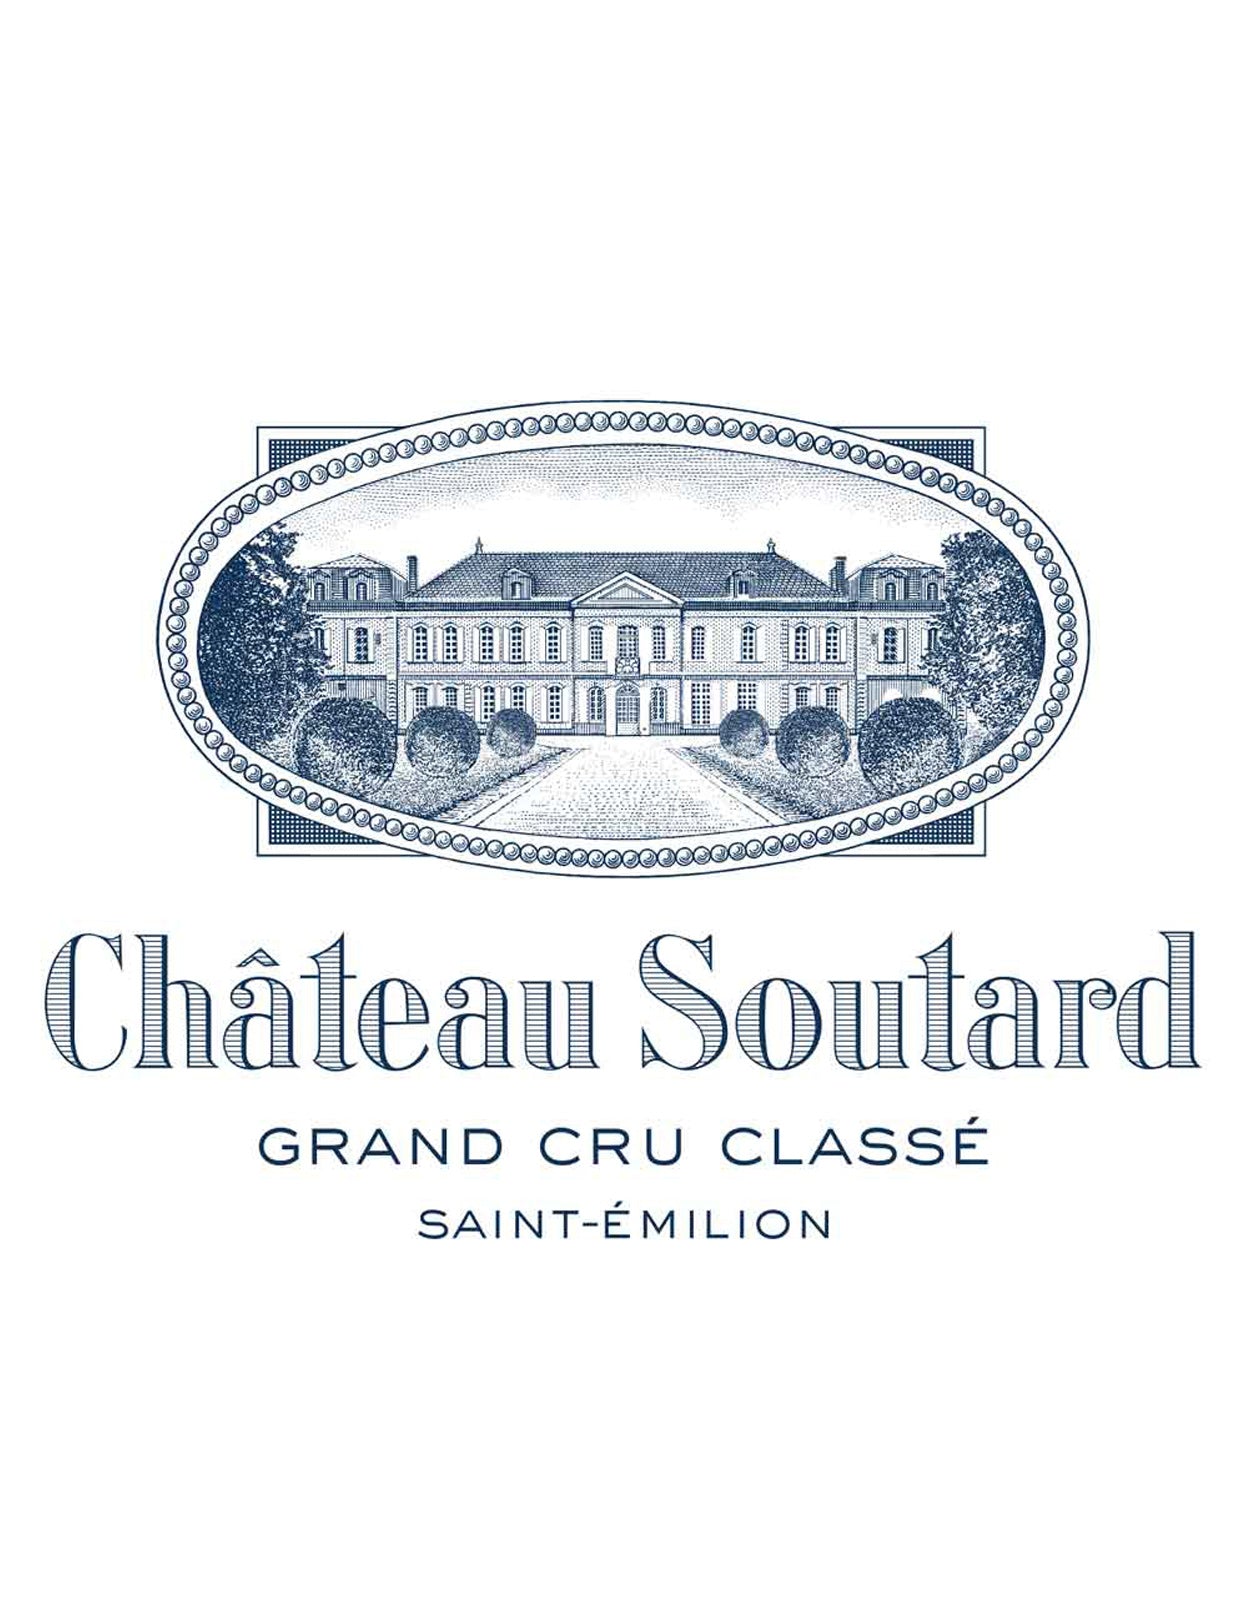 Chateau Soutard 2010